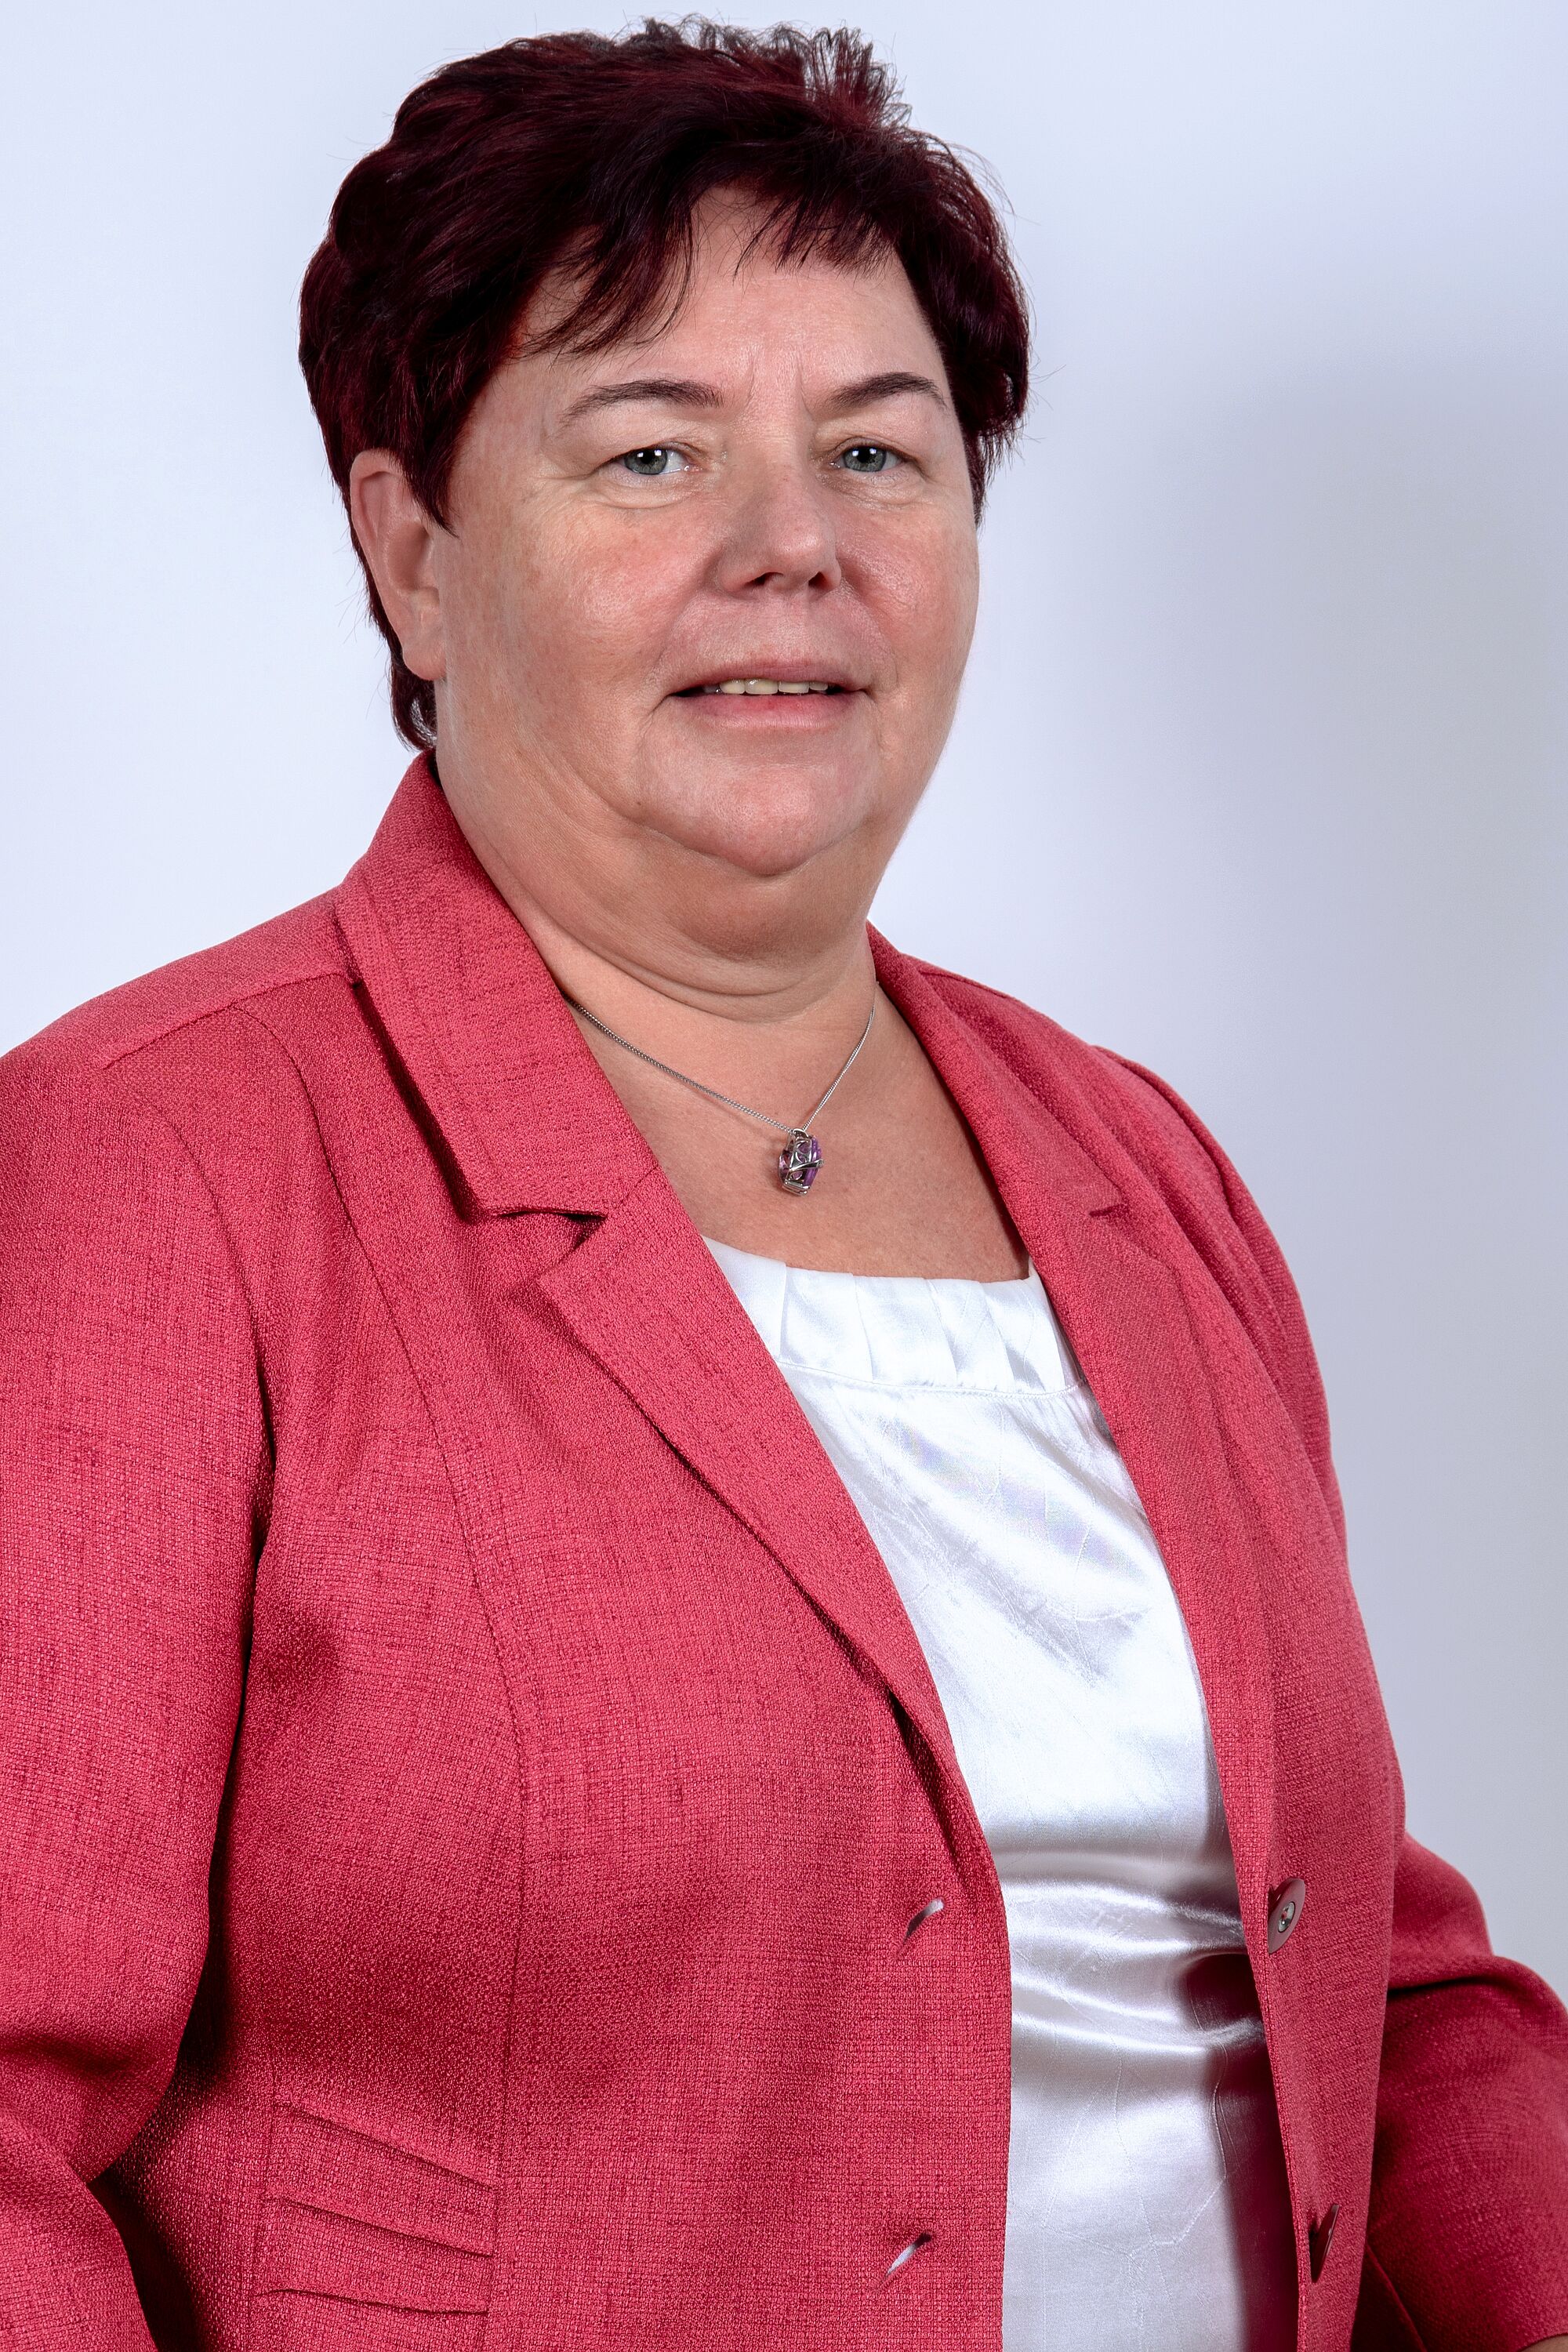 Mrs. Doris Krull - Chairwoman of the Staff Council